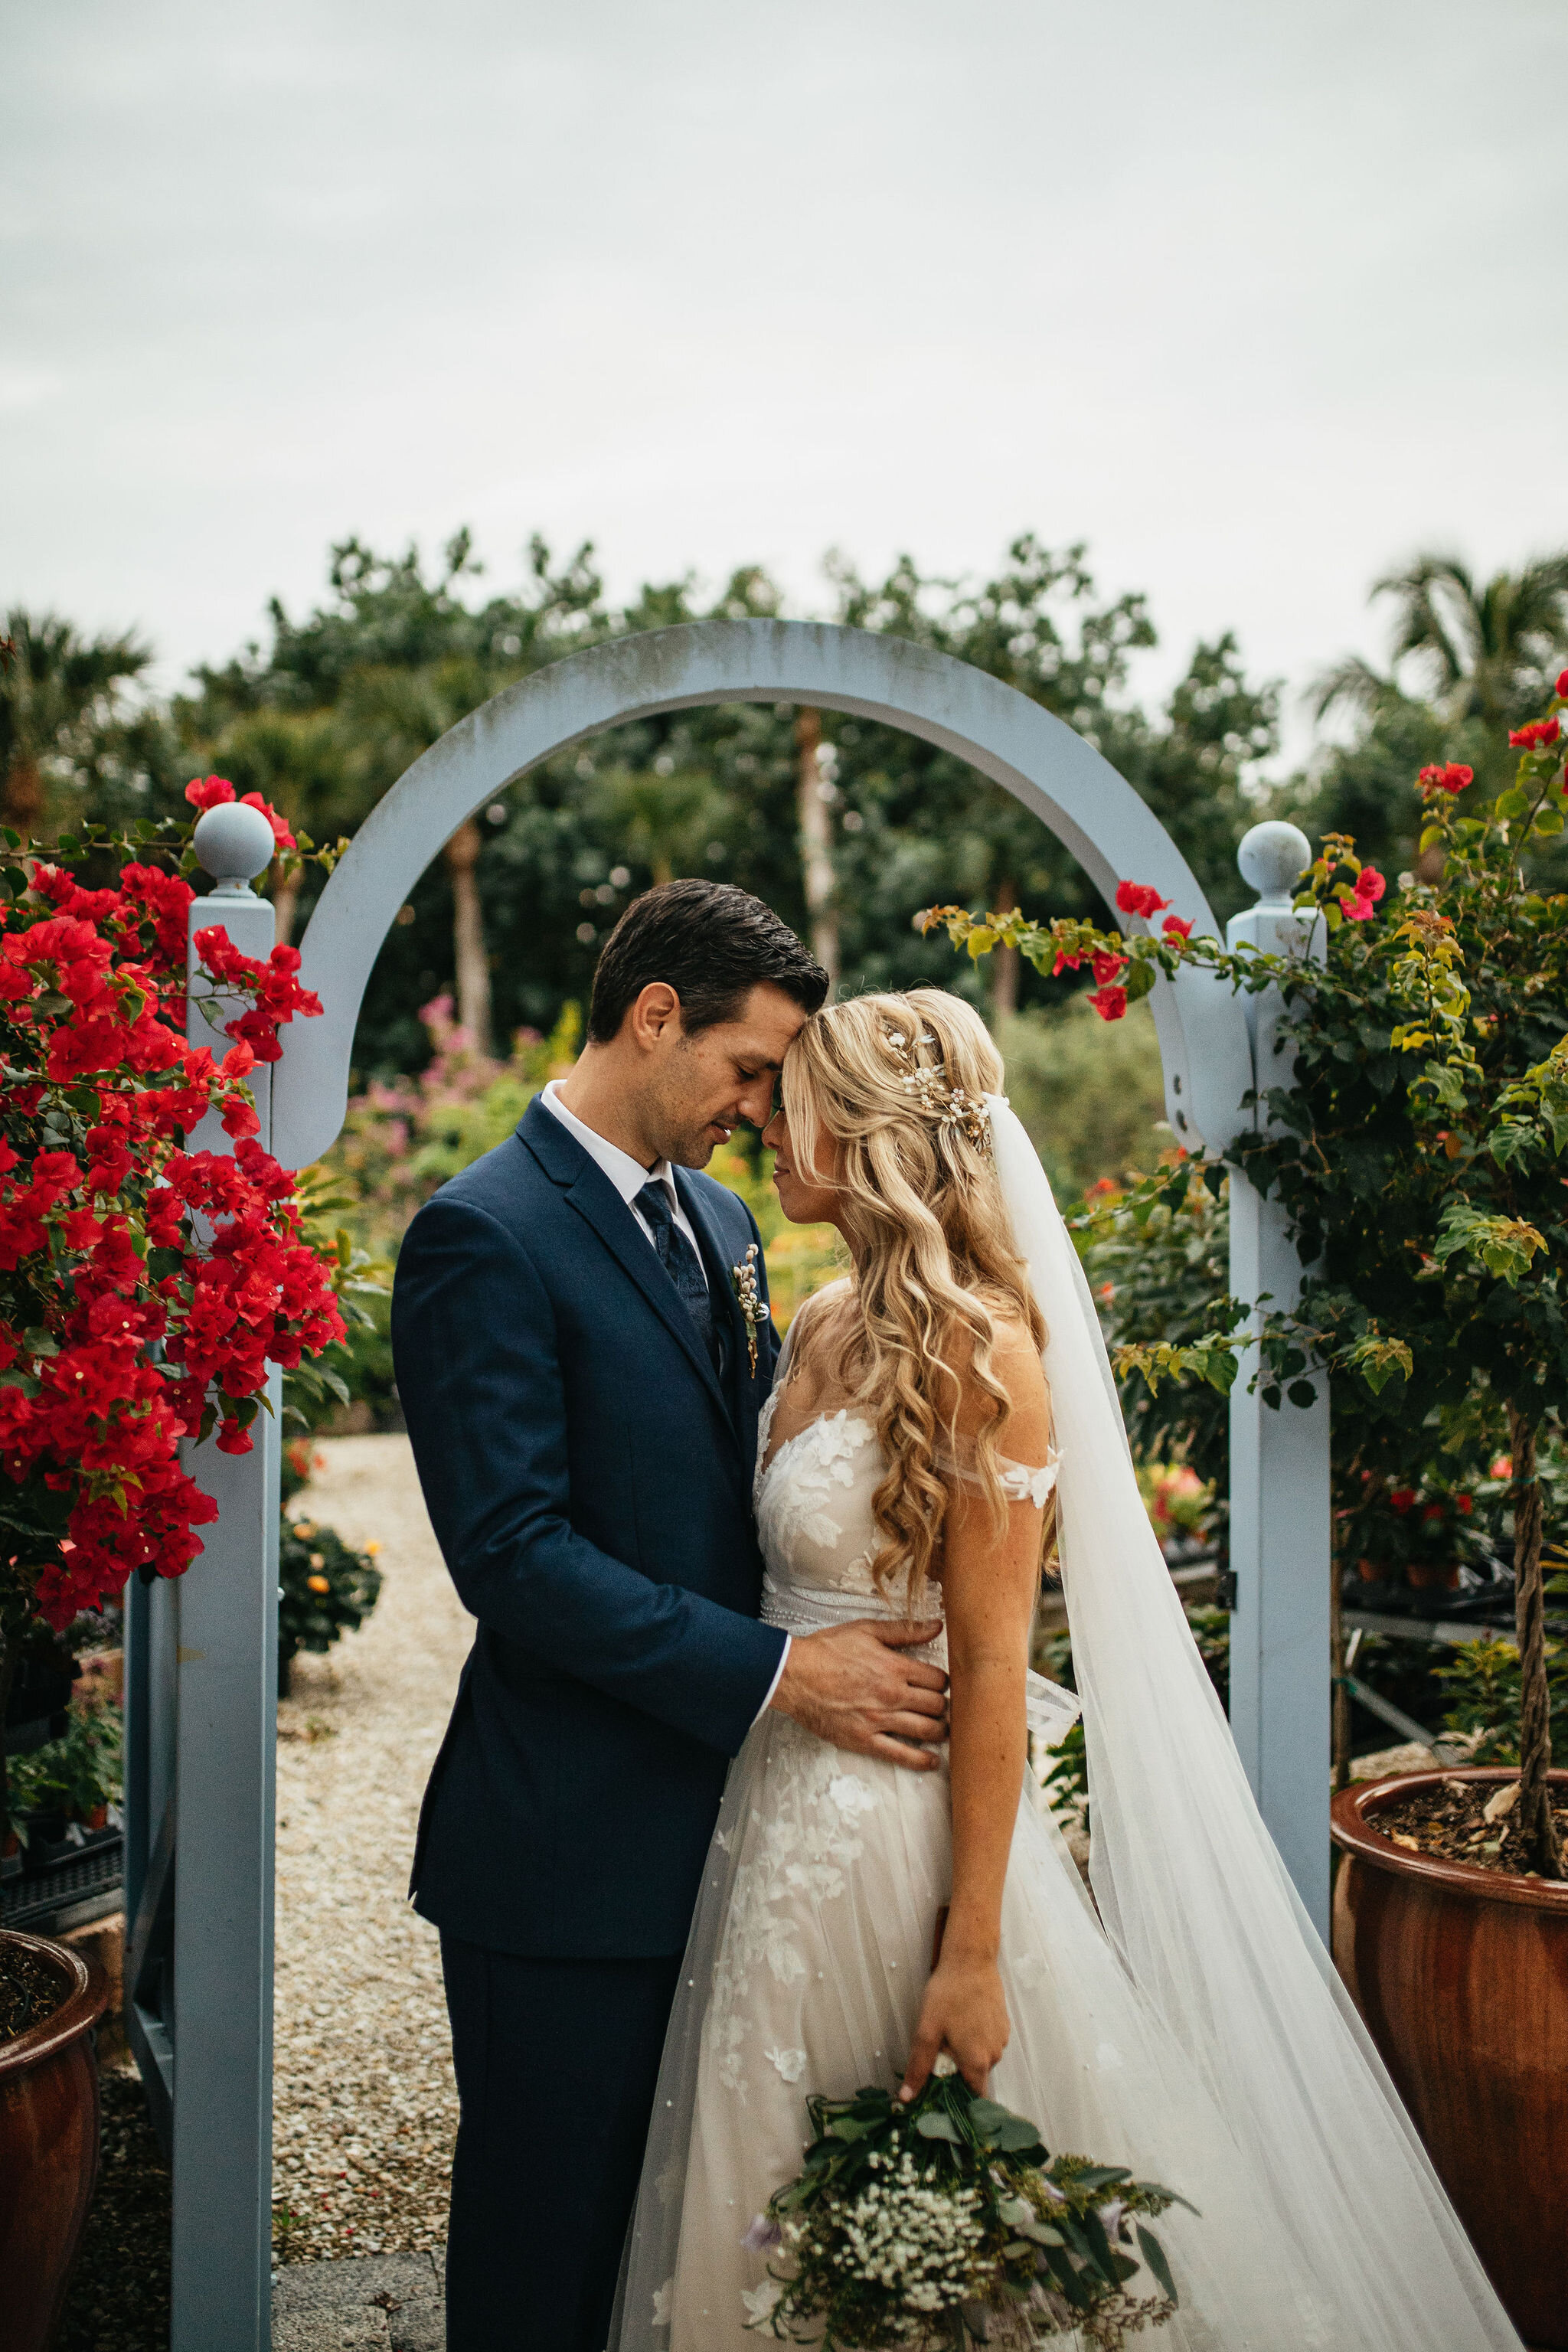 Sanibel Island, Florida Wedding Photo/Video team Christina &amp; Jeremiah